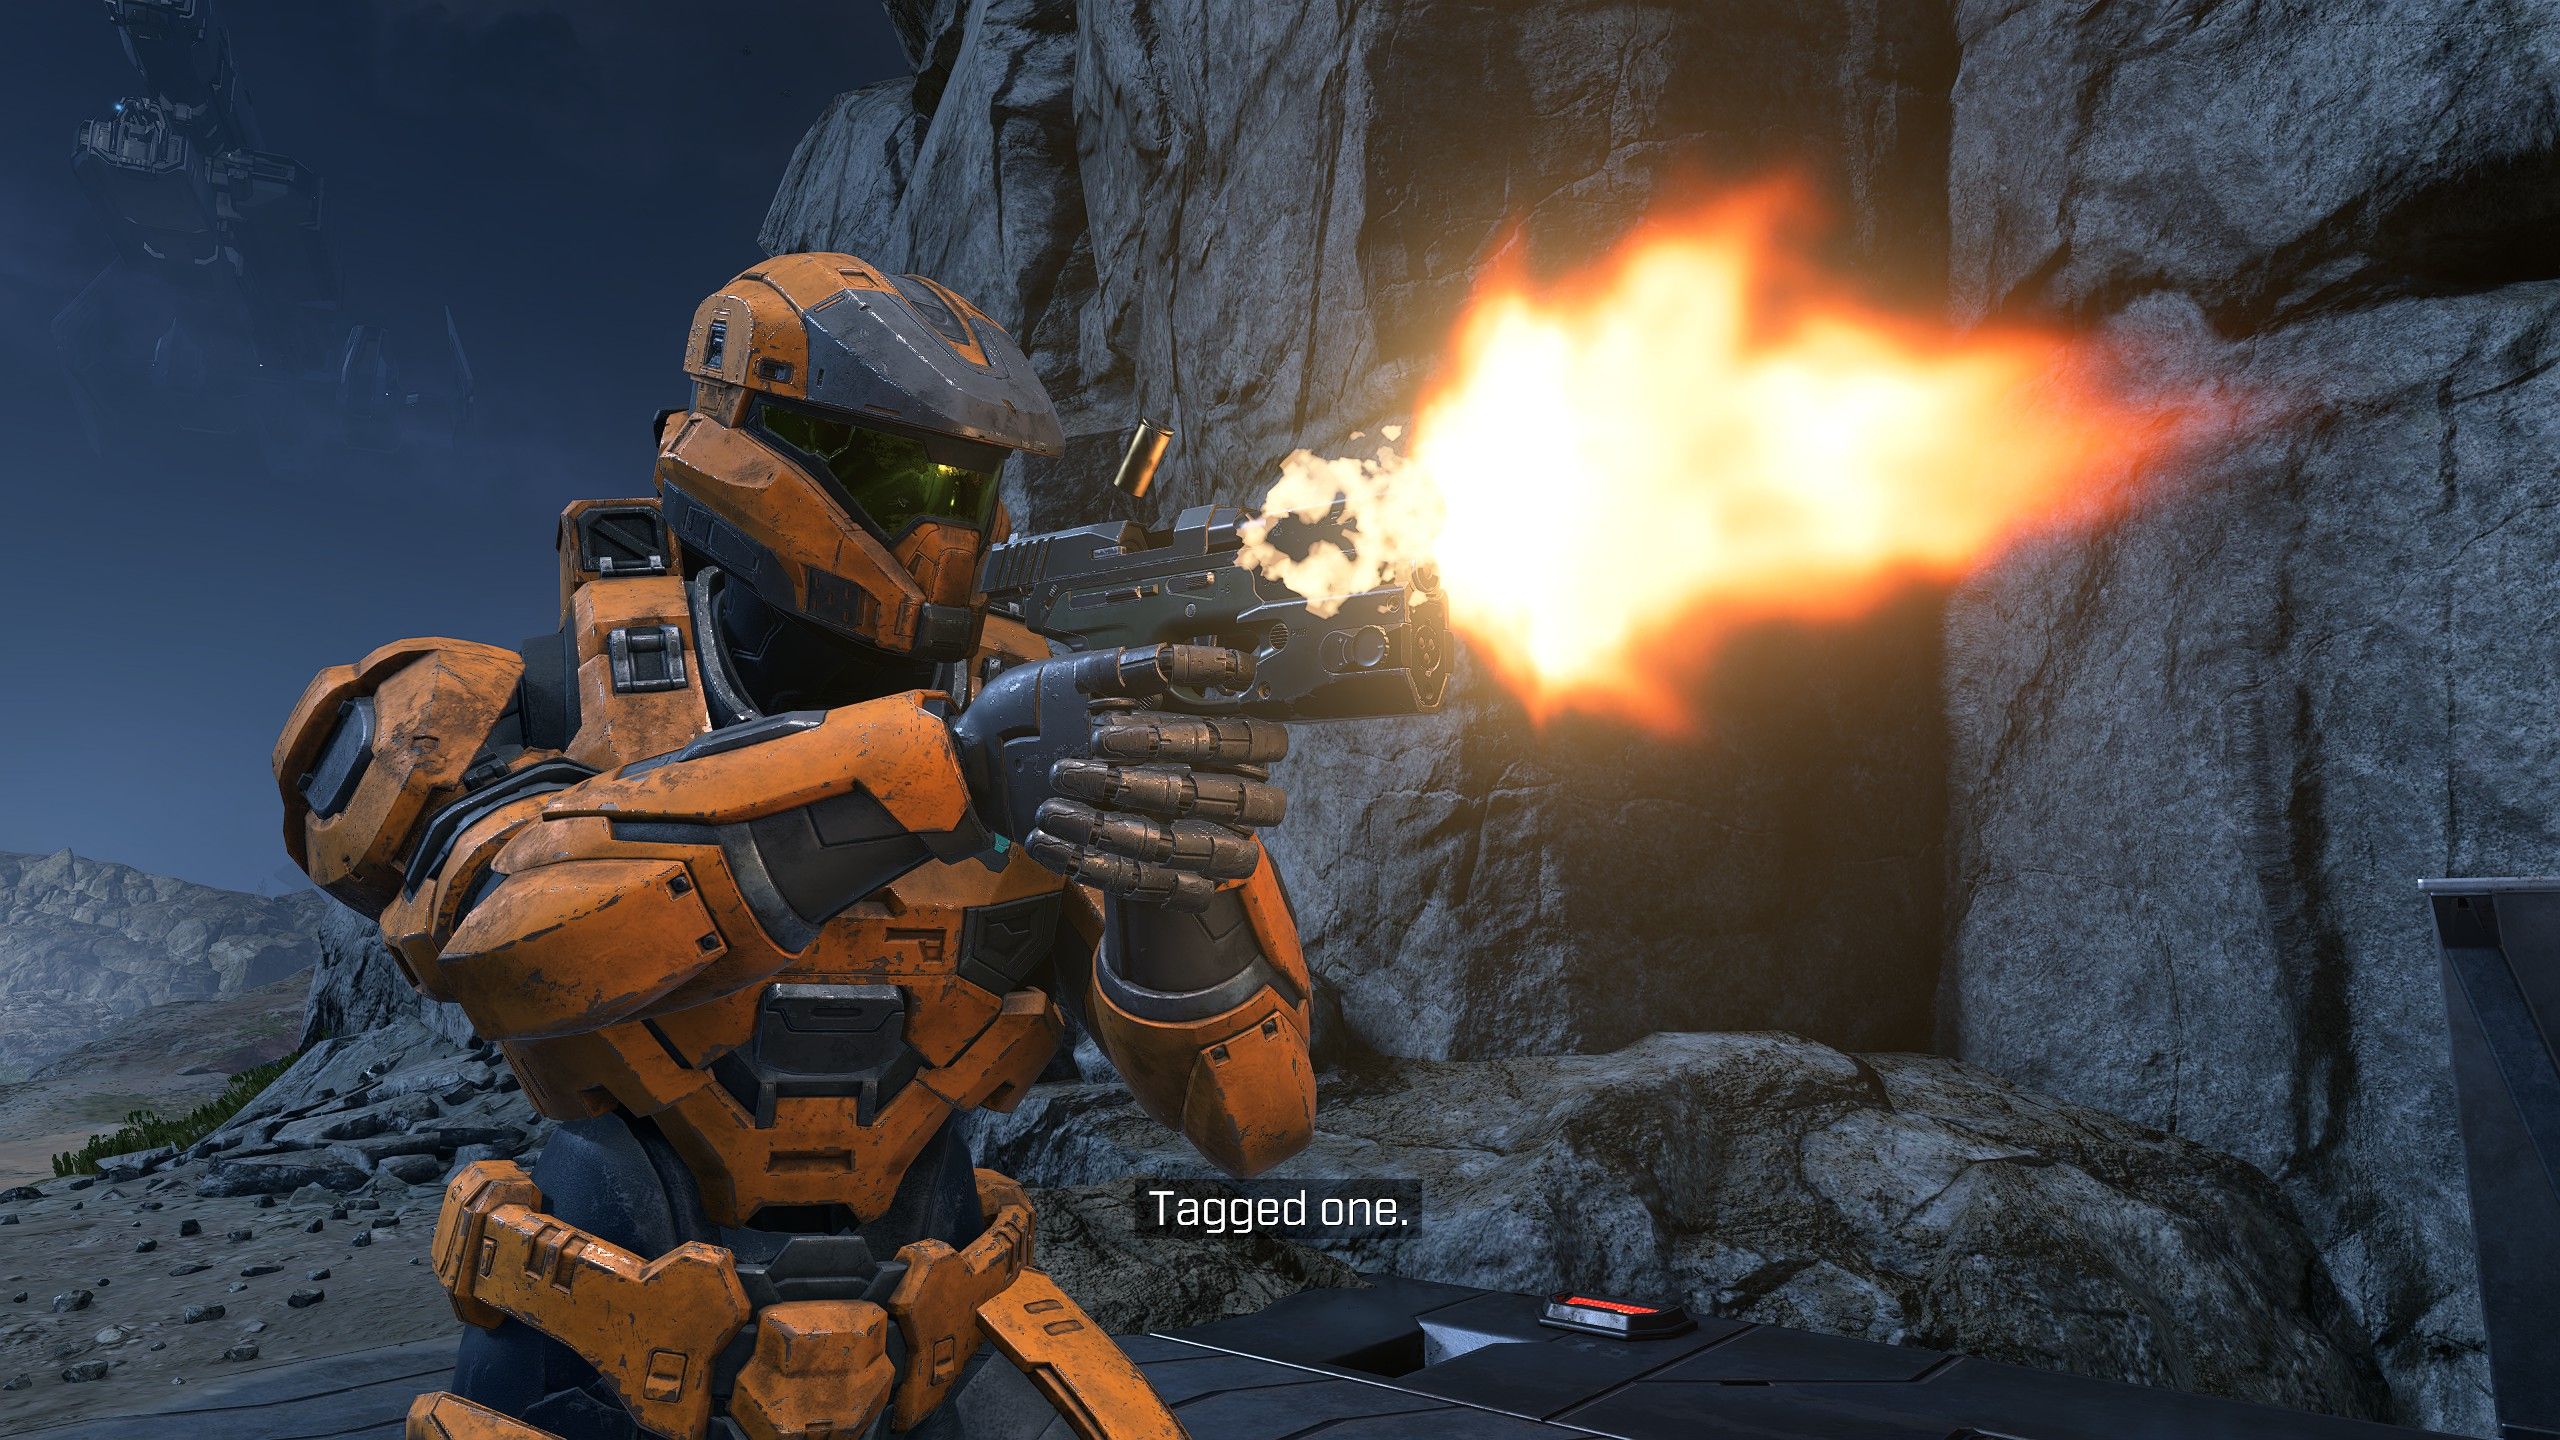 A Spartan soldier in orange armour firing their pistol in a close up screenshot